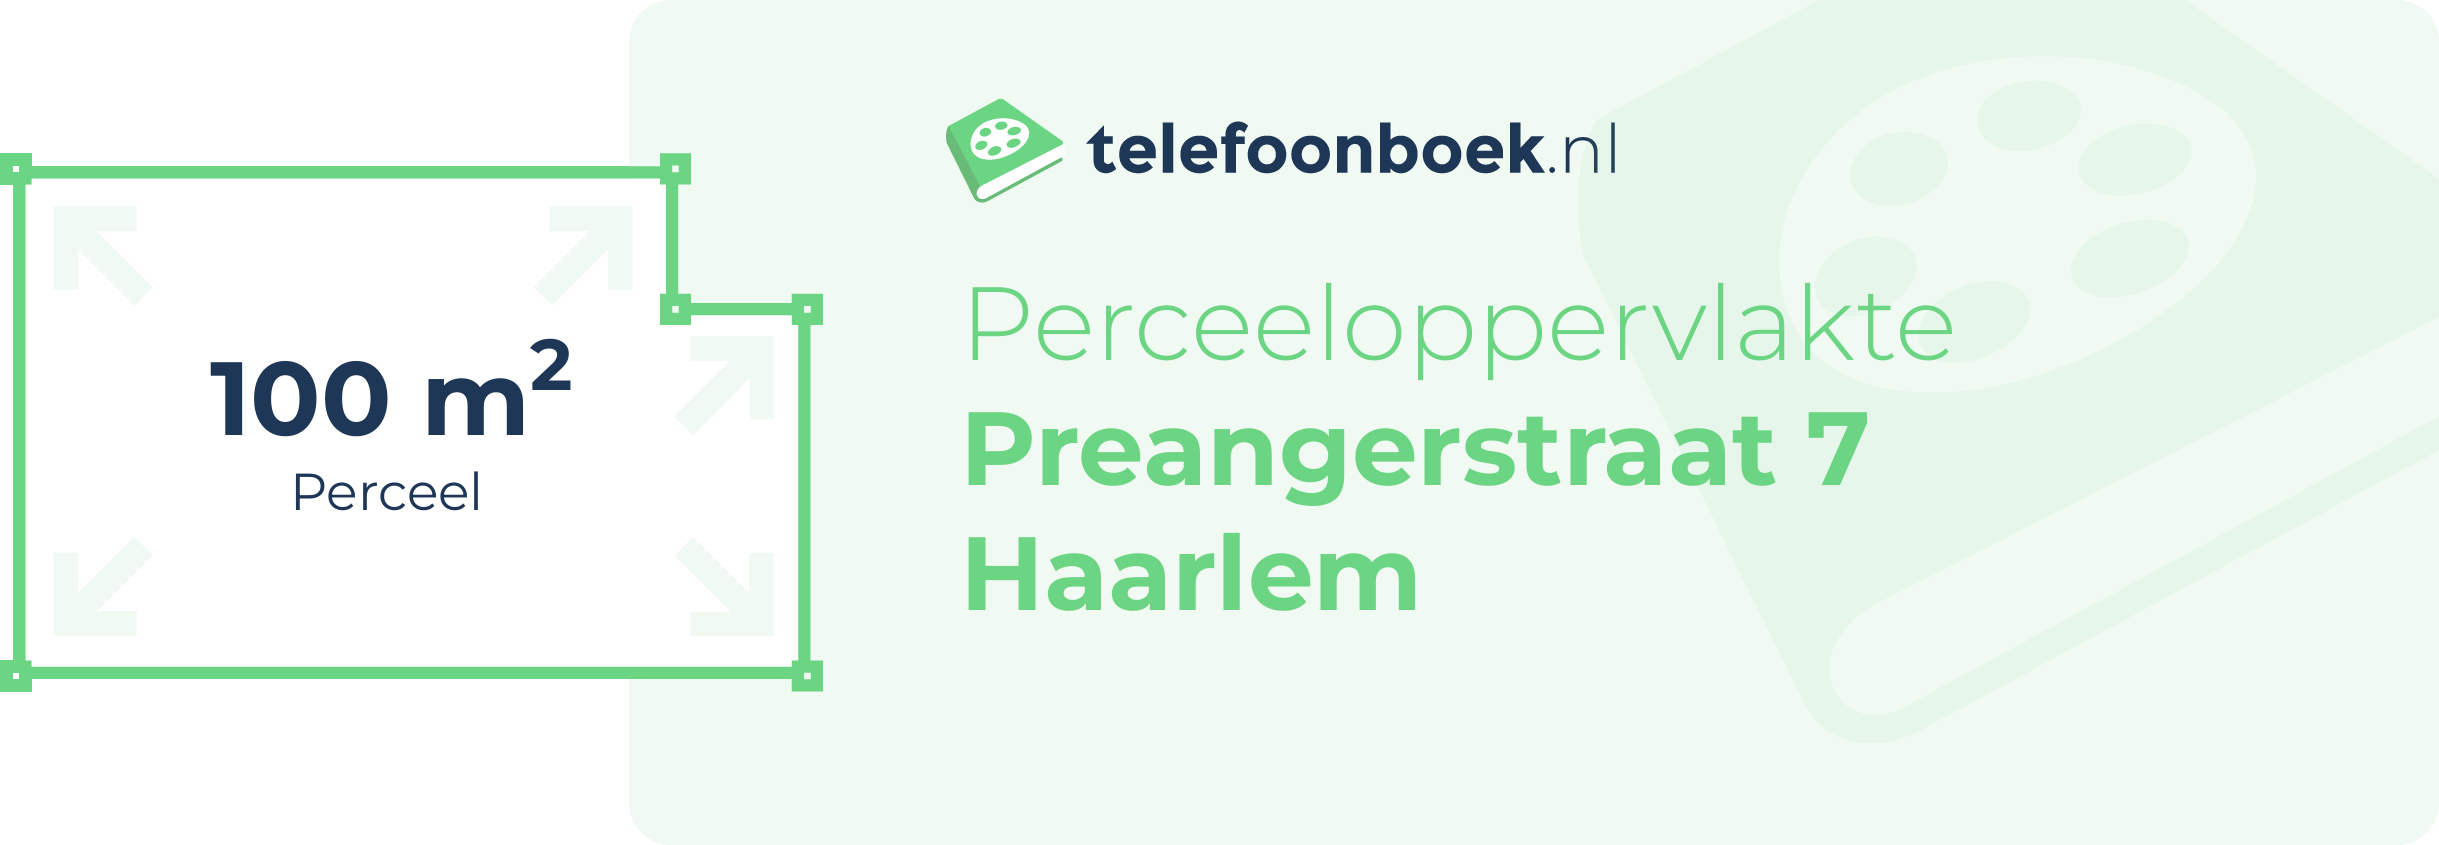 Perceeloppervlakte Preangerstraat 7 Haarlem